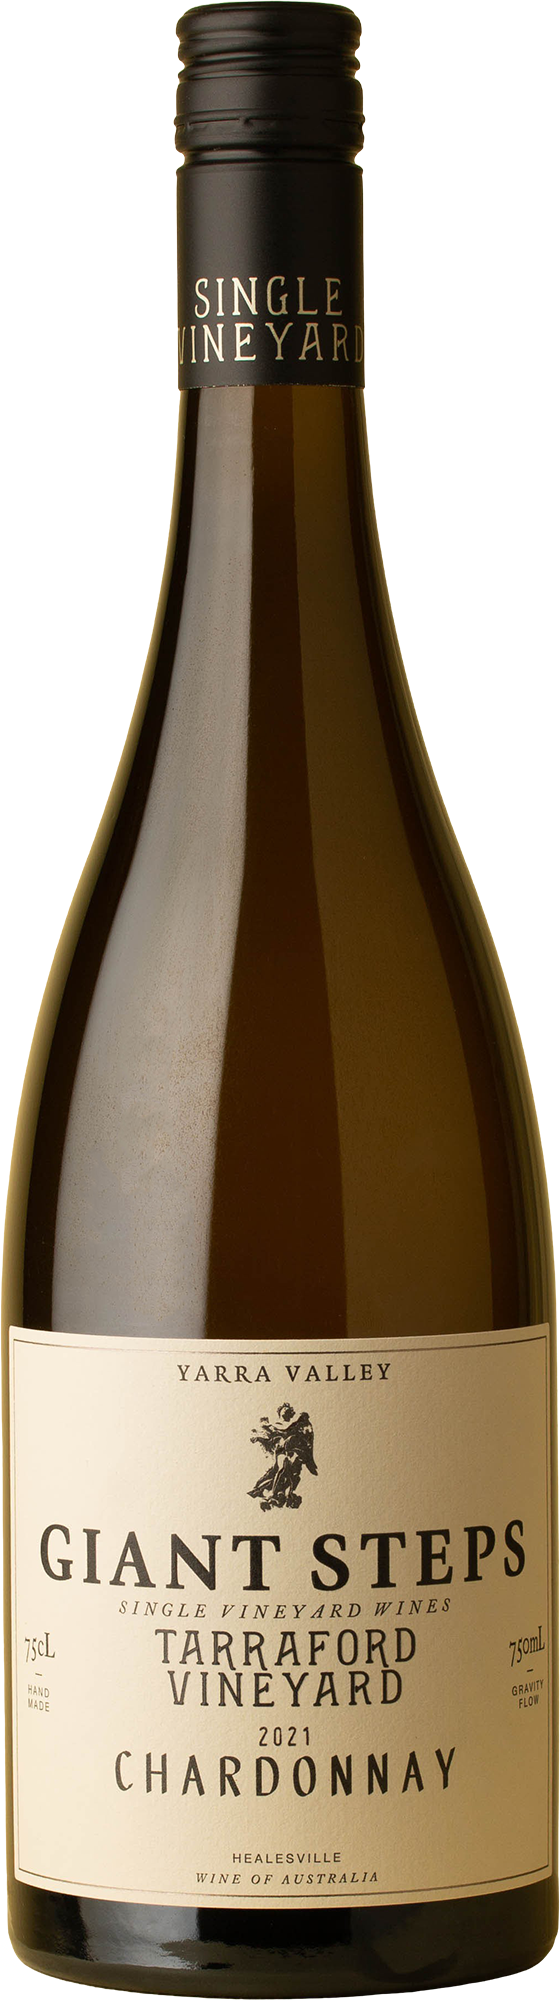 Giant Steps - Tarraford Vineyard Chardonnay 2021 White Wine